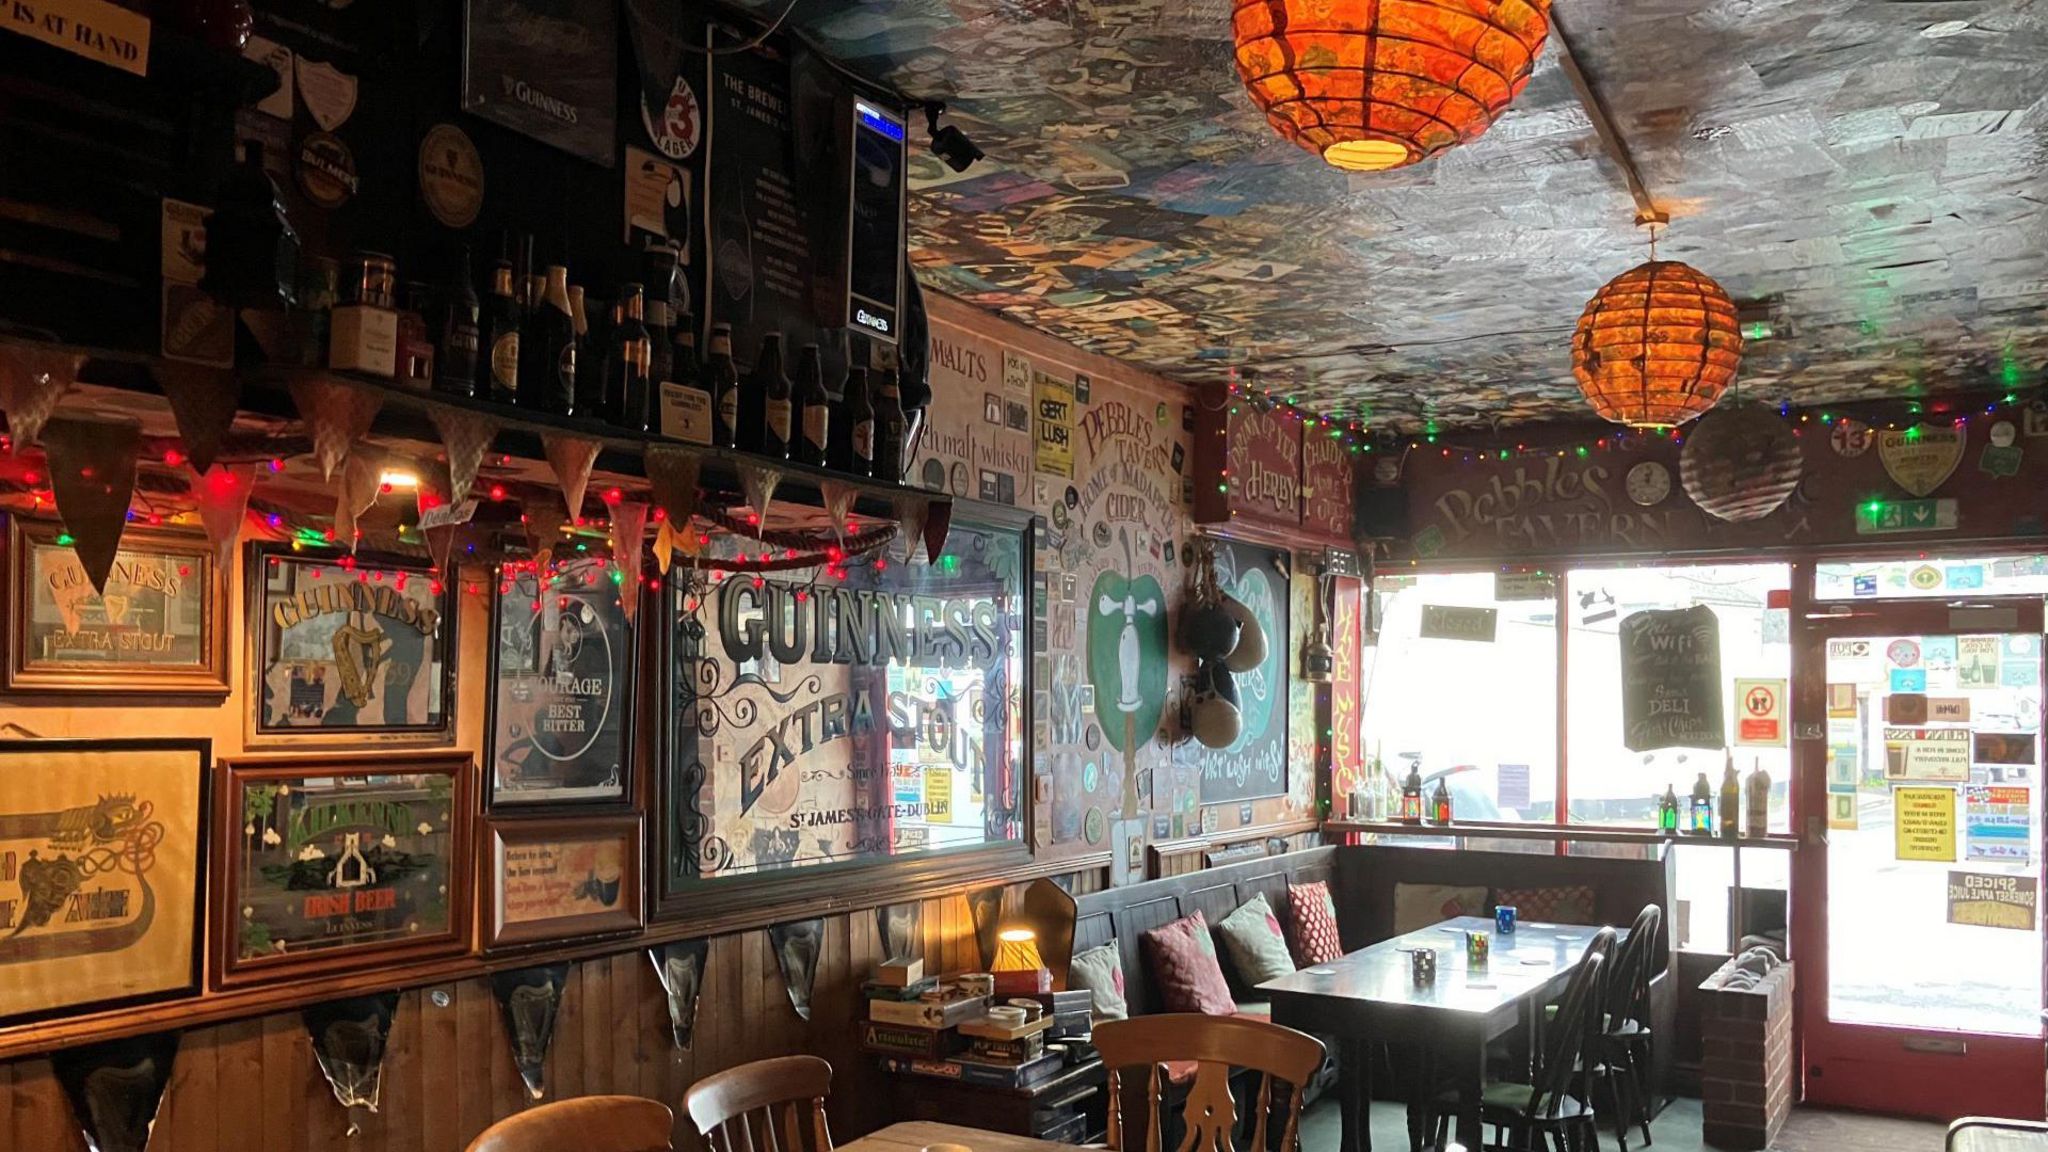 Inside the Pebbles Tavern